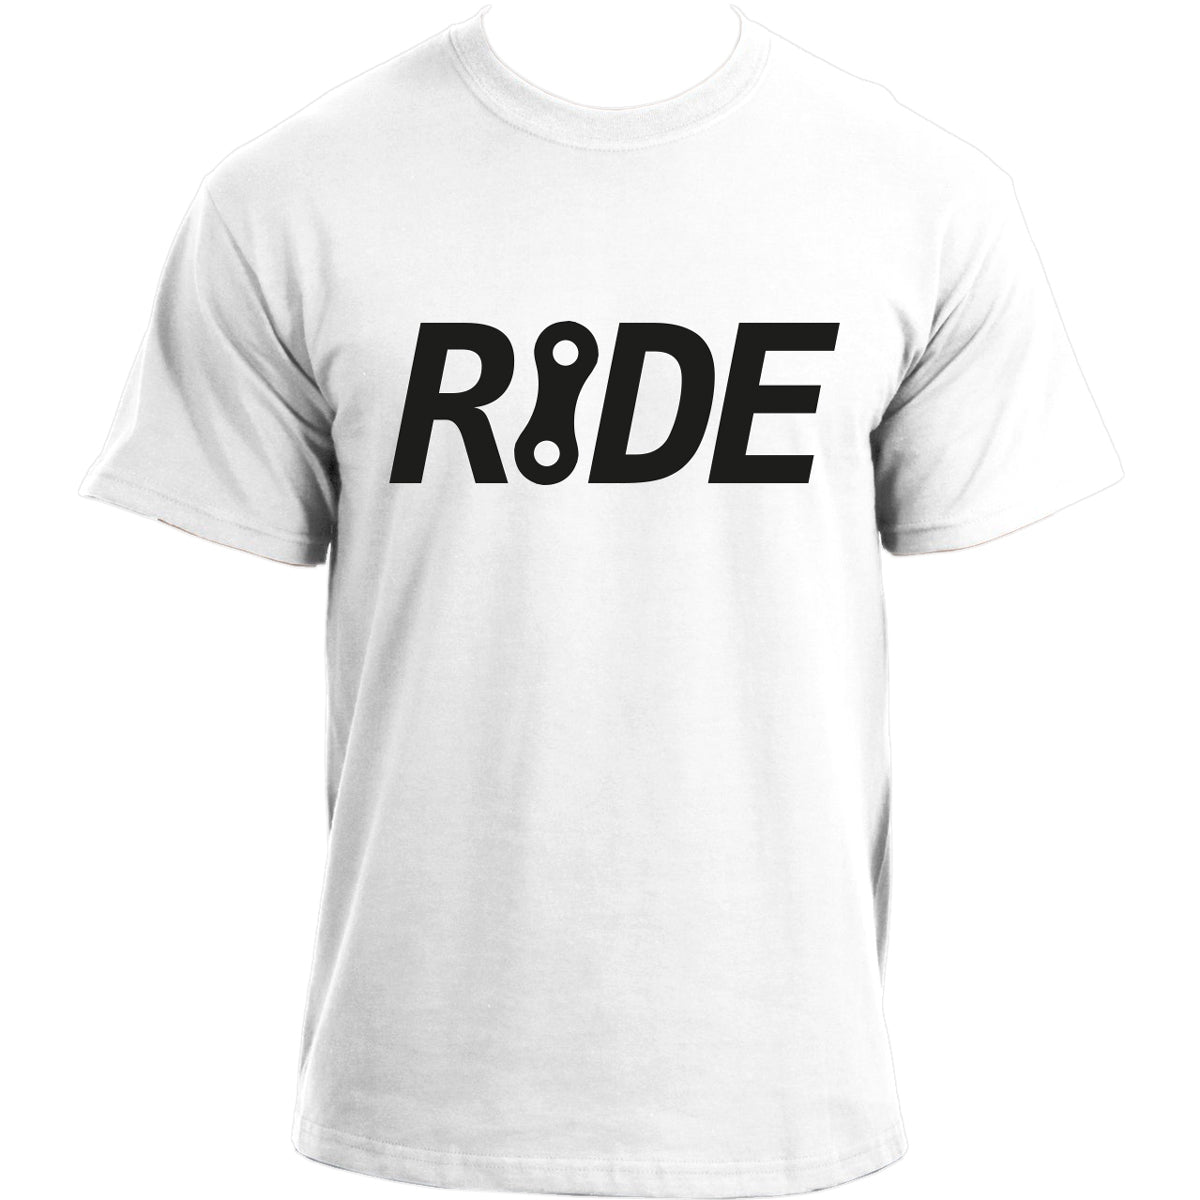 RIDE a bike - Bicycle tee Cycling sports top Cotton Short Sleeve T shirt